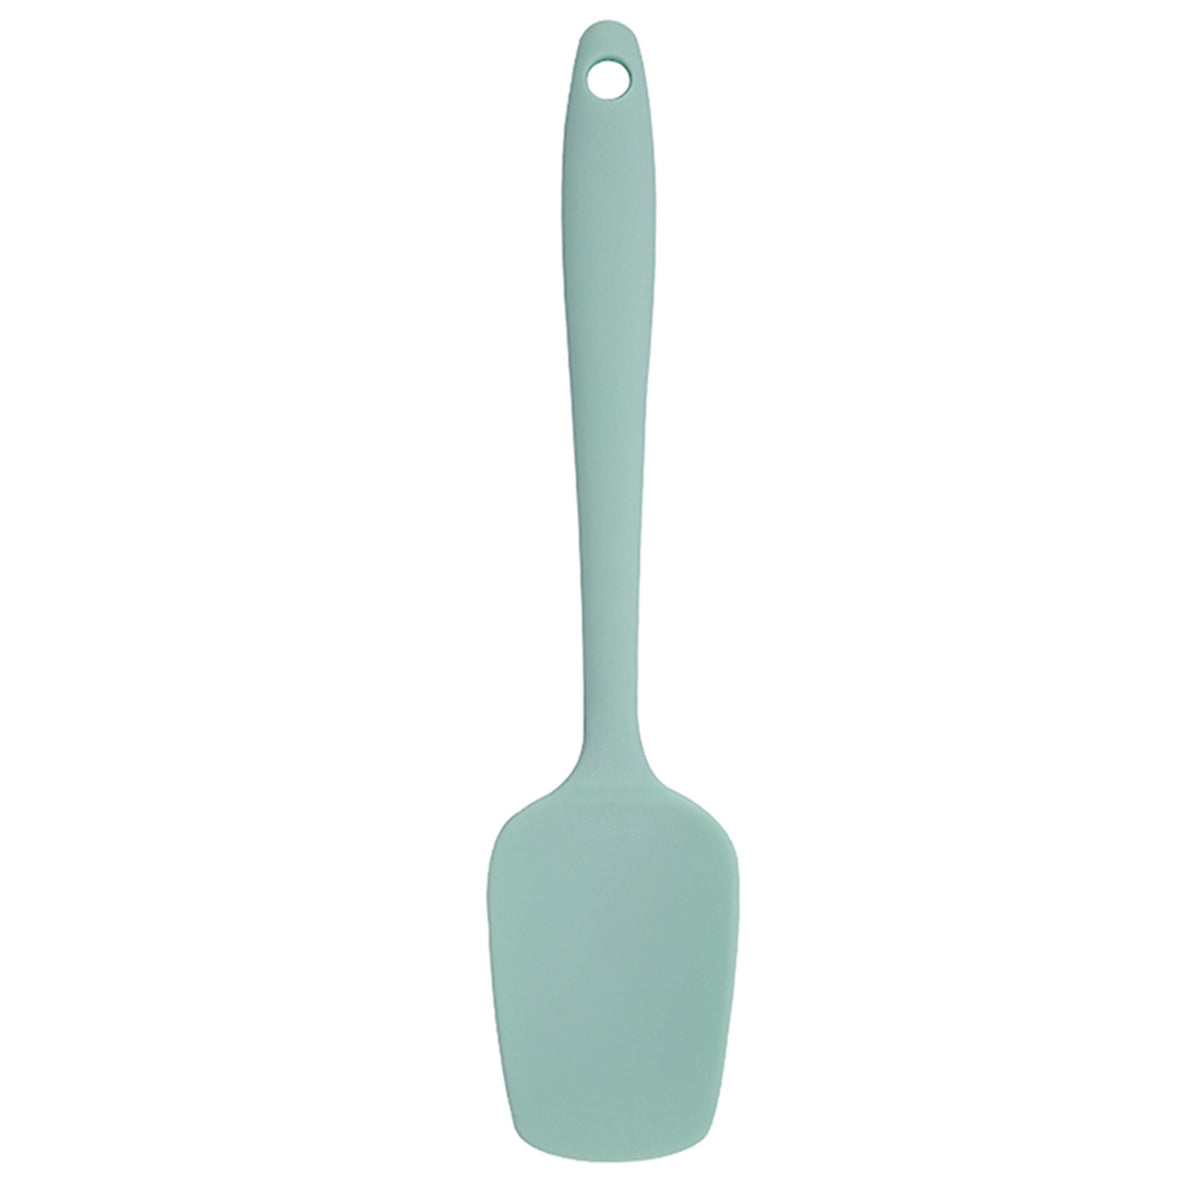 Cooking Spoon, Silicone Kitchenware, Kitchen Baking Tool